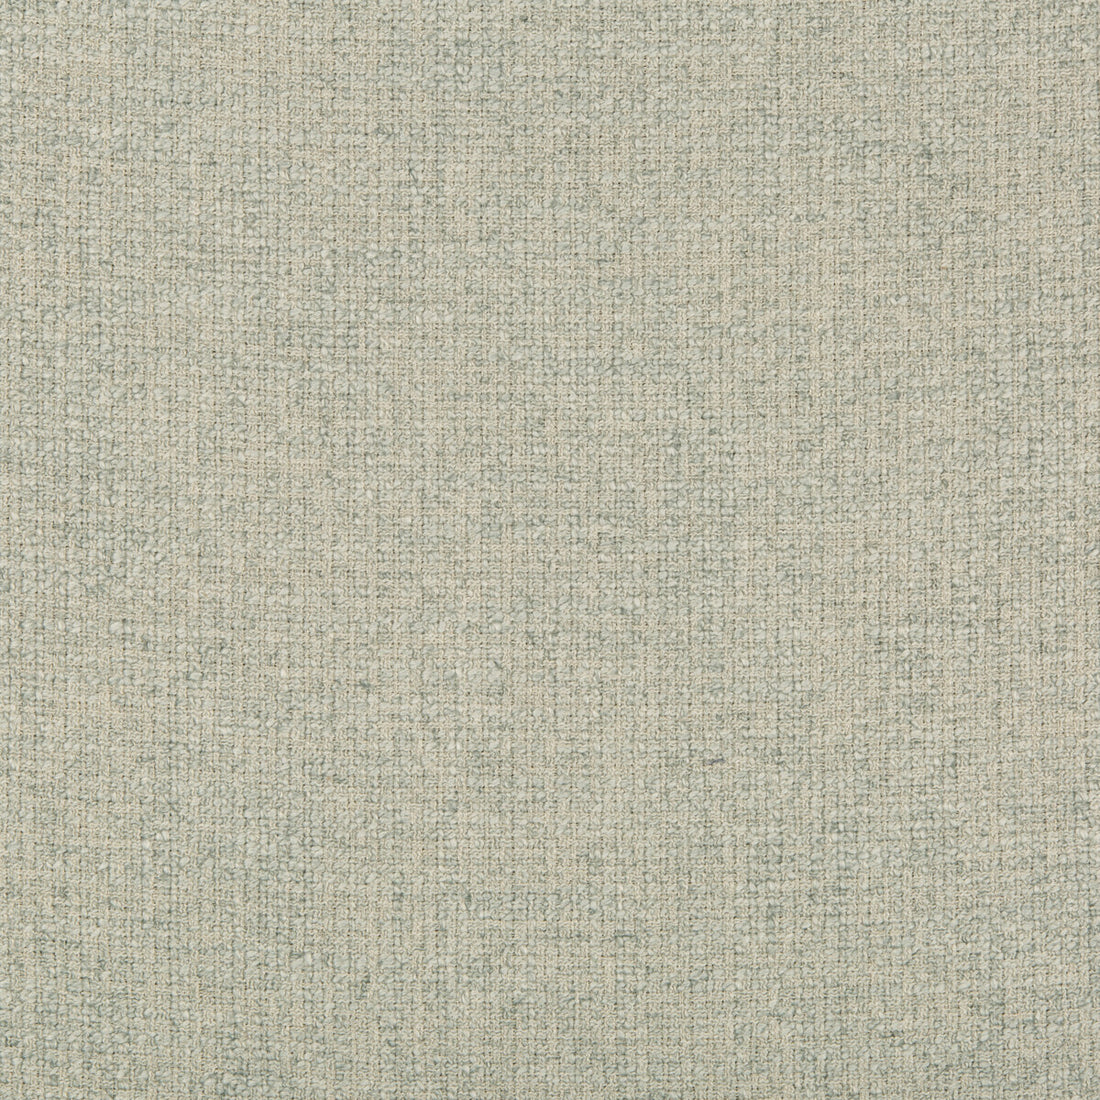 Kravet Smart fabric in 35329-15 color - pattern 35329.15.0 - by Kravet Smart in the Performance Kravetarmor collection